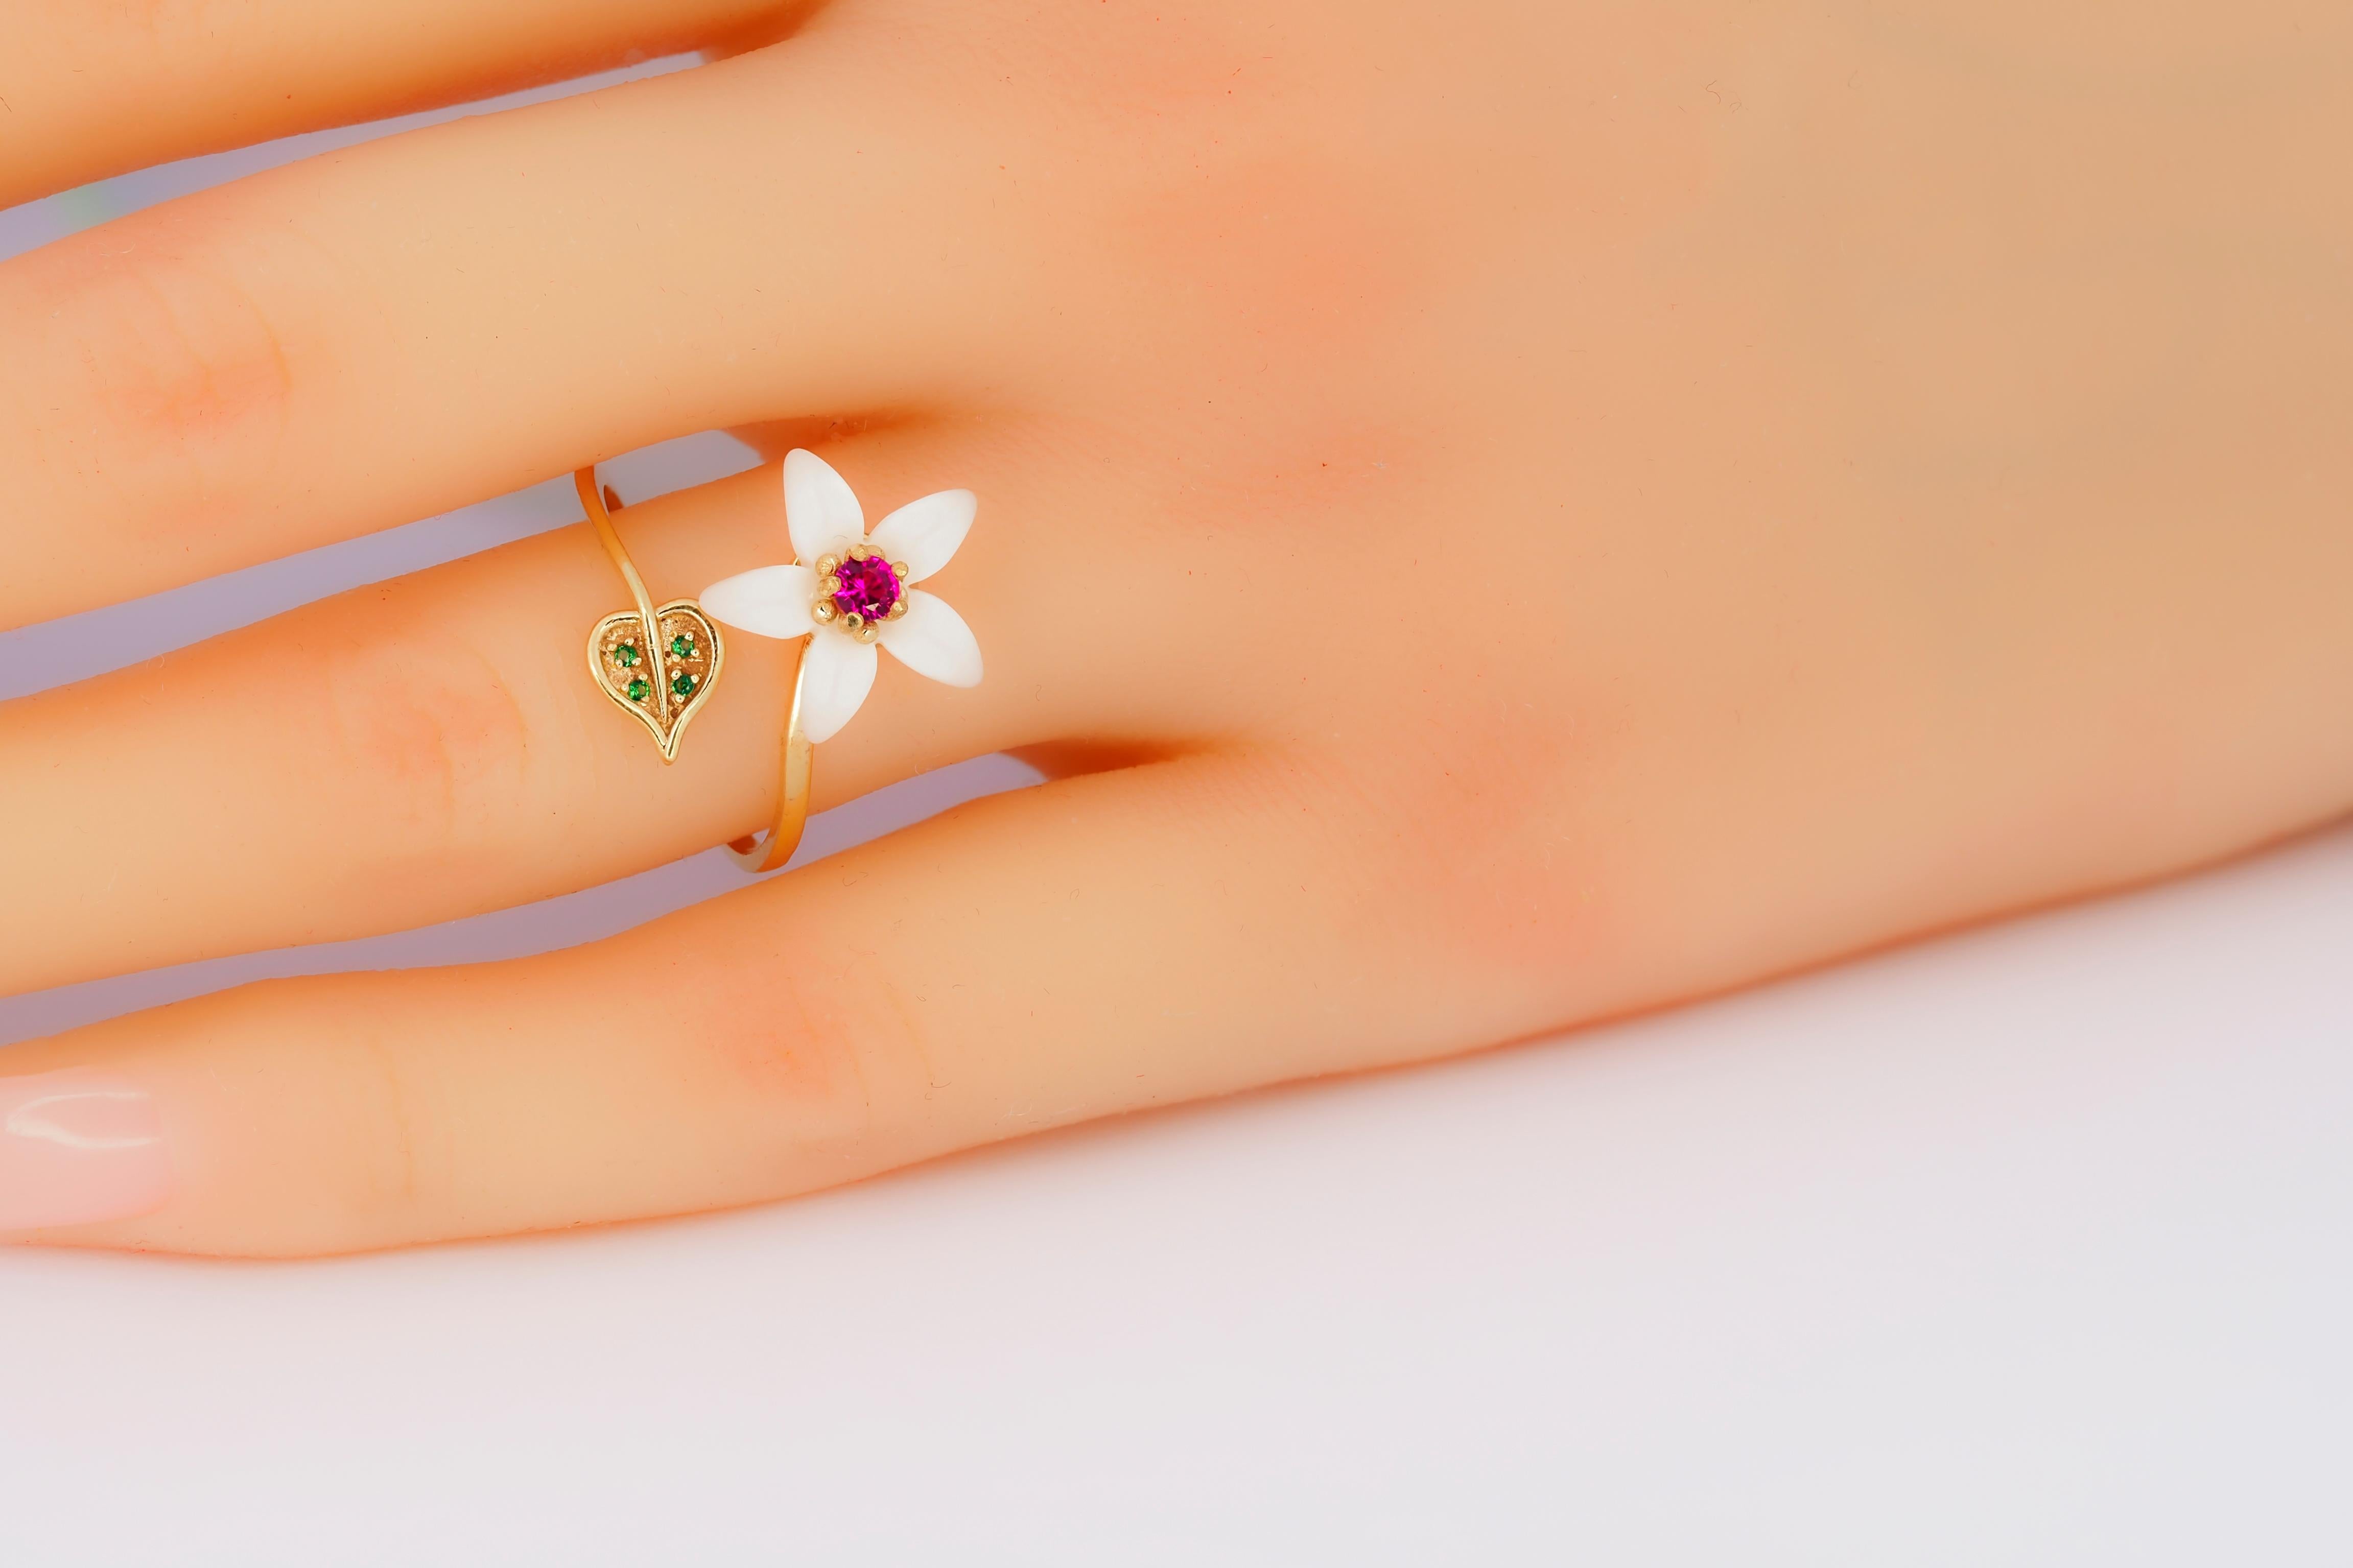 For Sale:  Carved Flower 14k ring with gemstones. 4